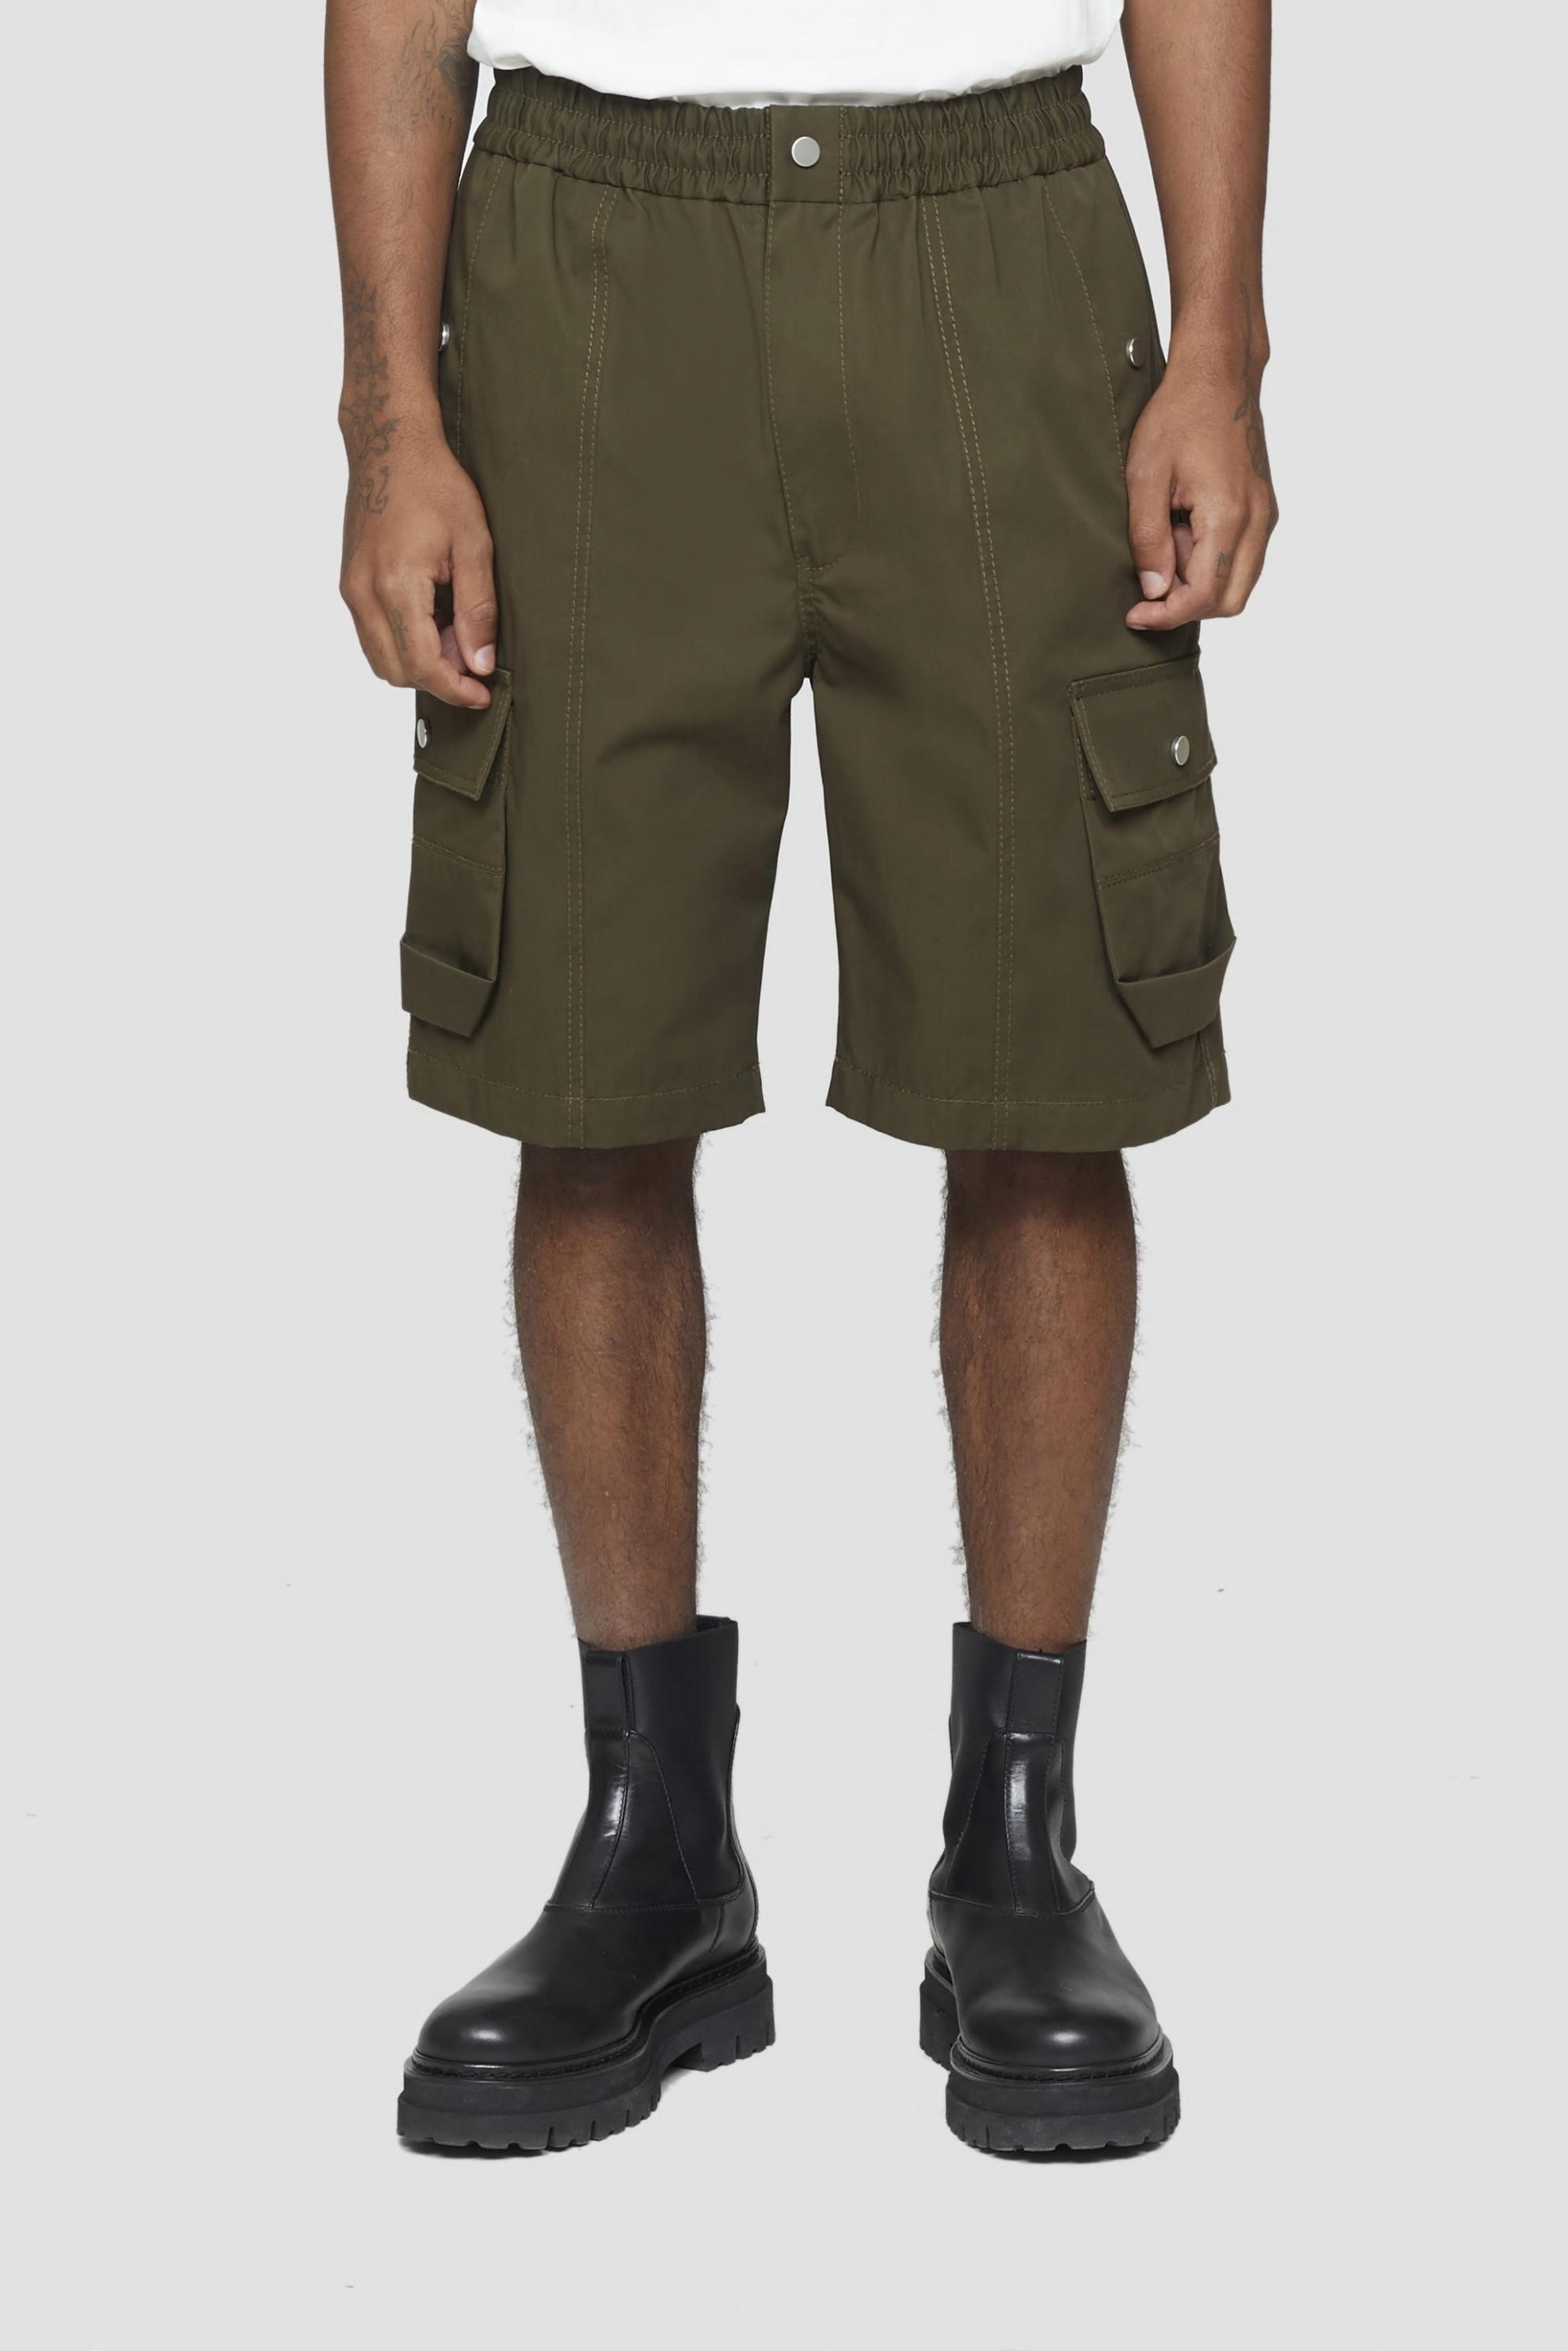 3.1 Phillip Lim Utility Cargo Shorts Olive | Mens Pants & Shorts